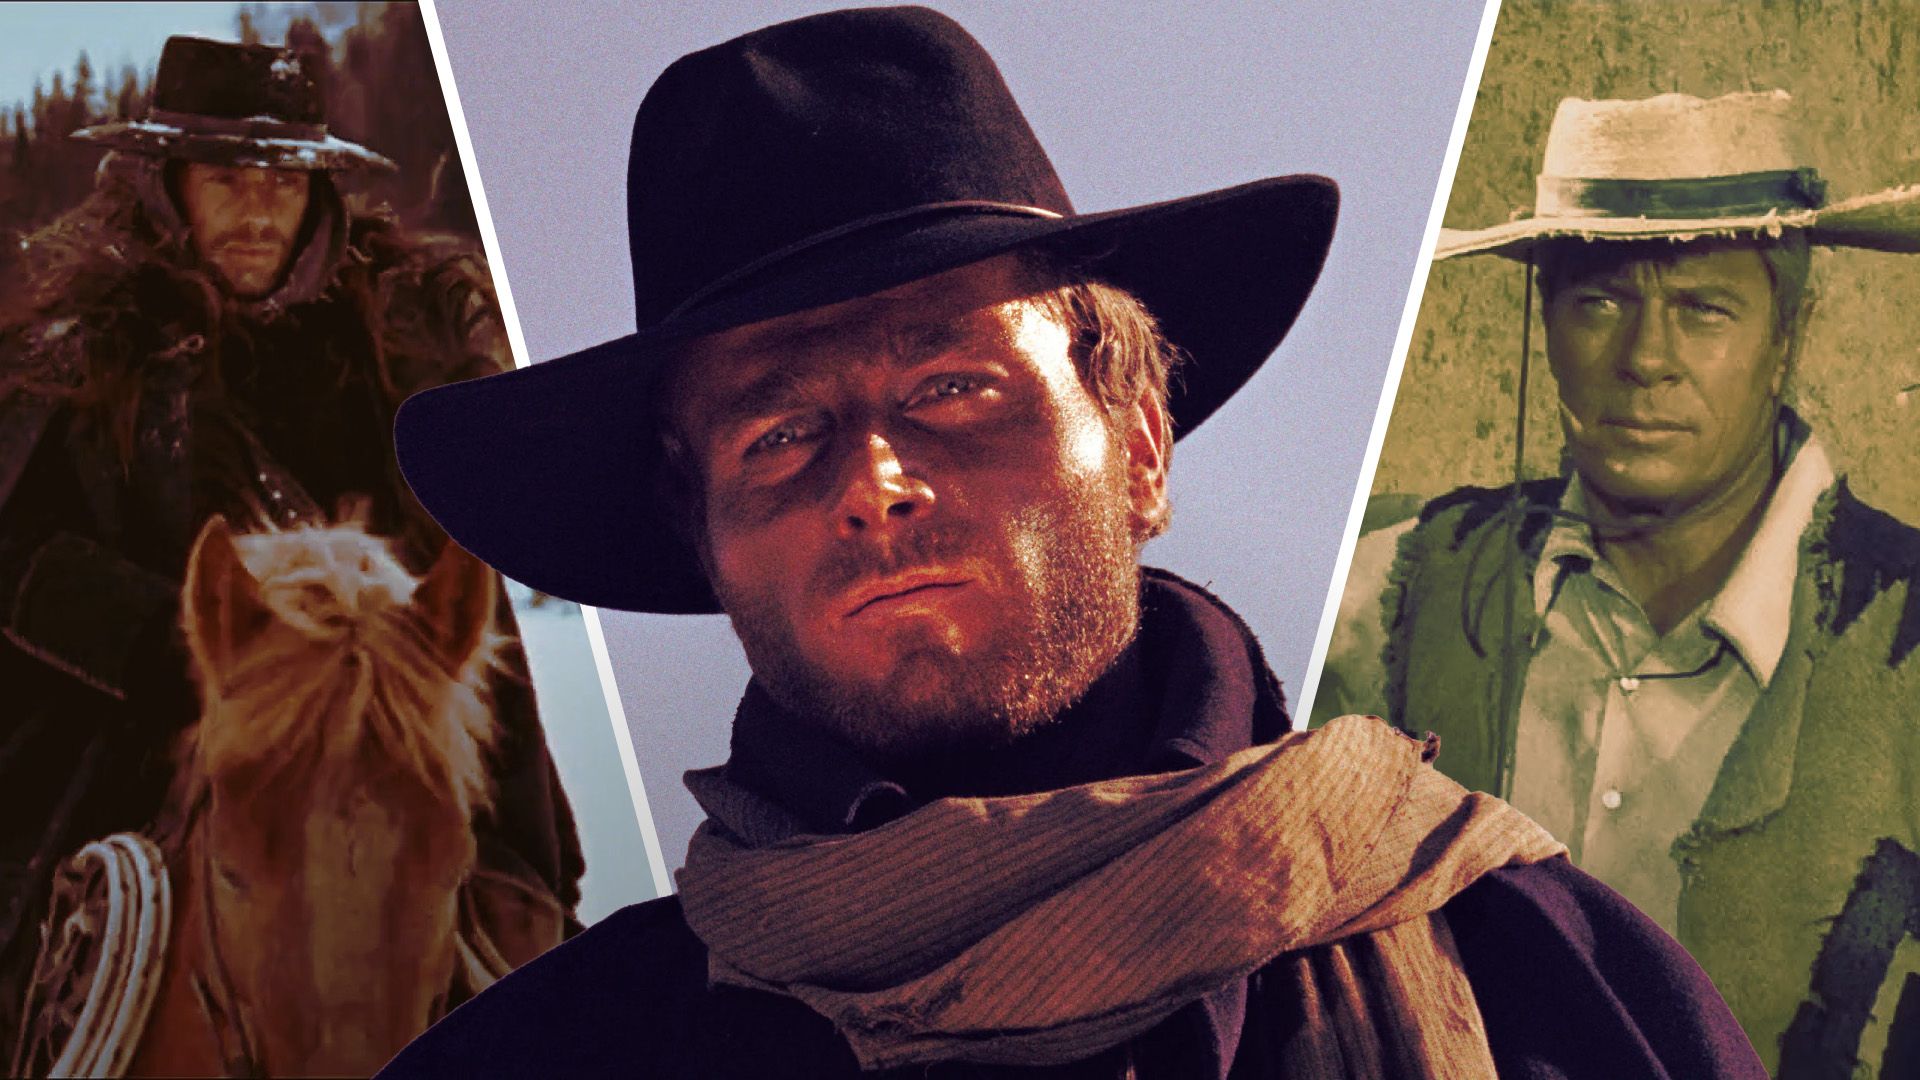 A custom image of three westerns